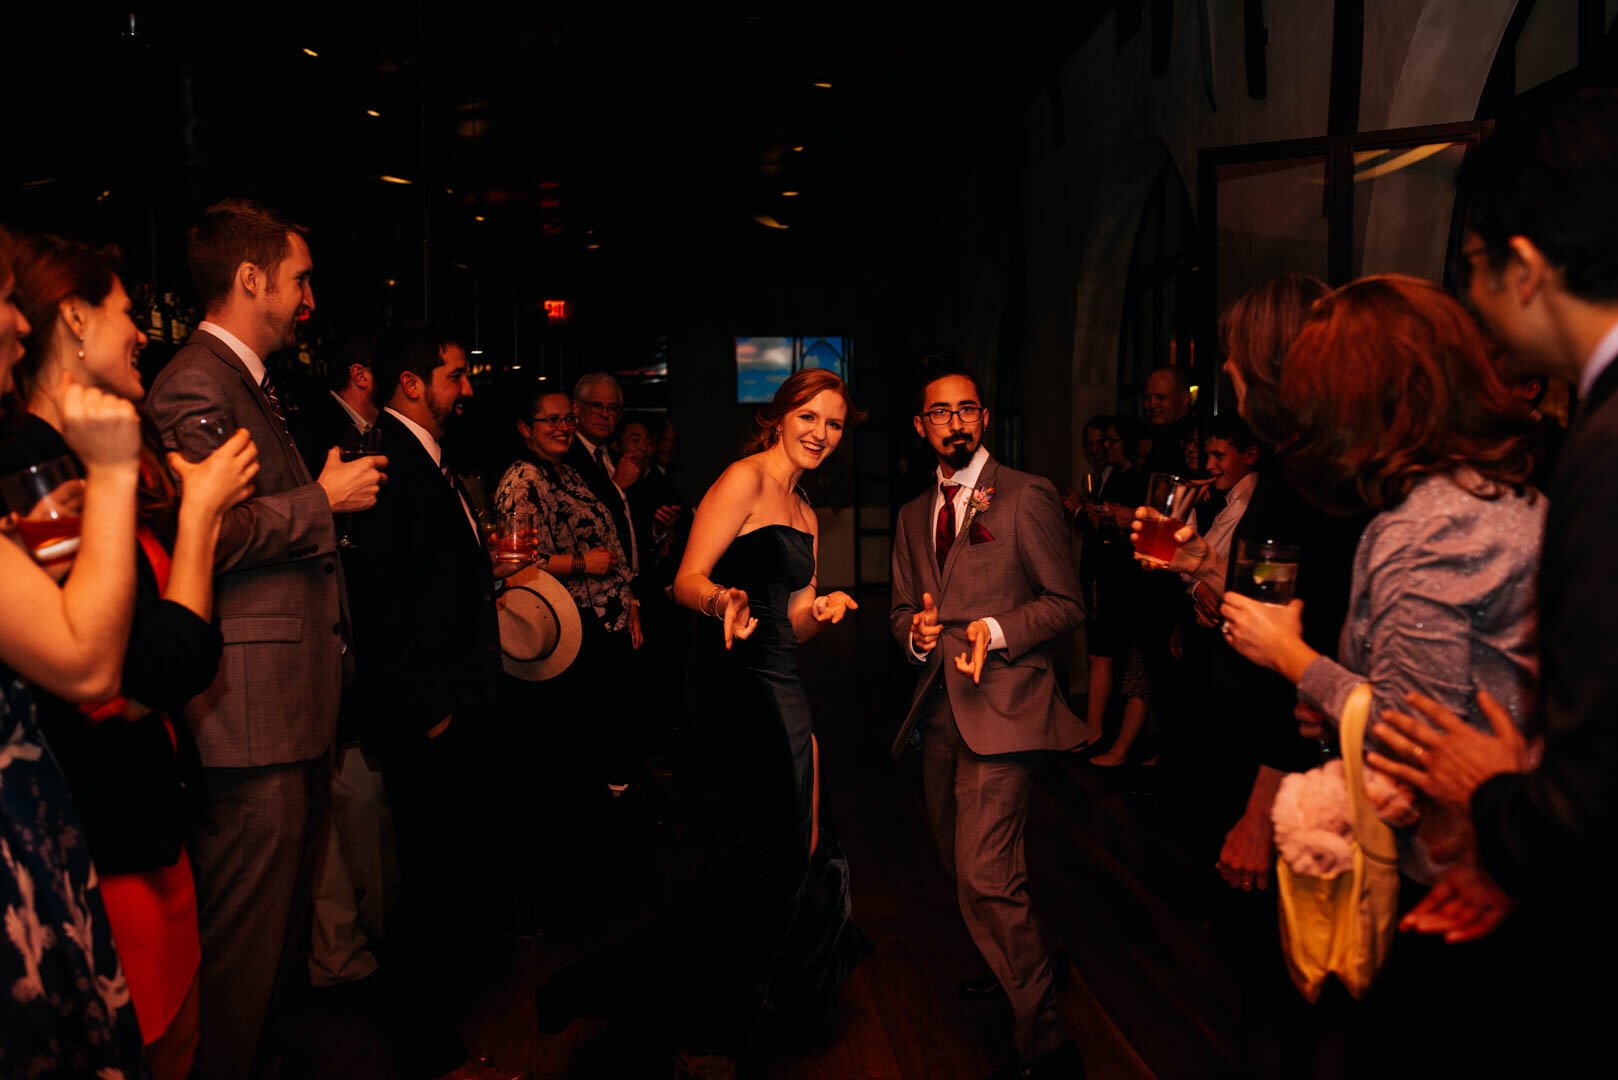 bridesmaid and groomsman dancing into the reception